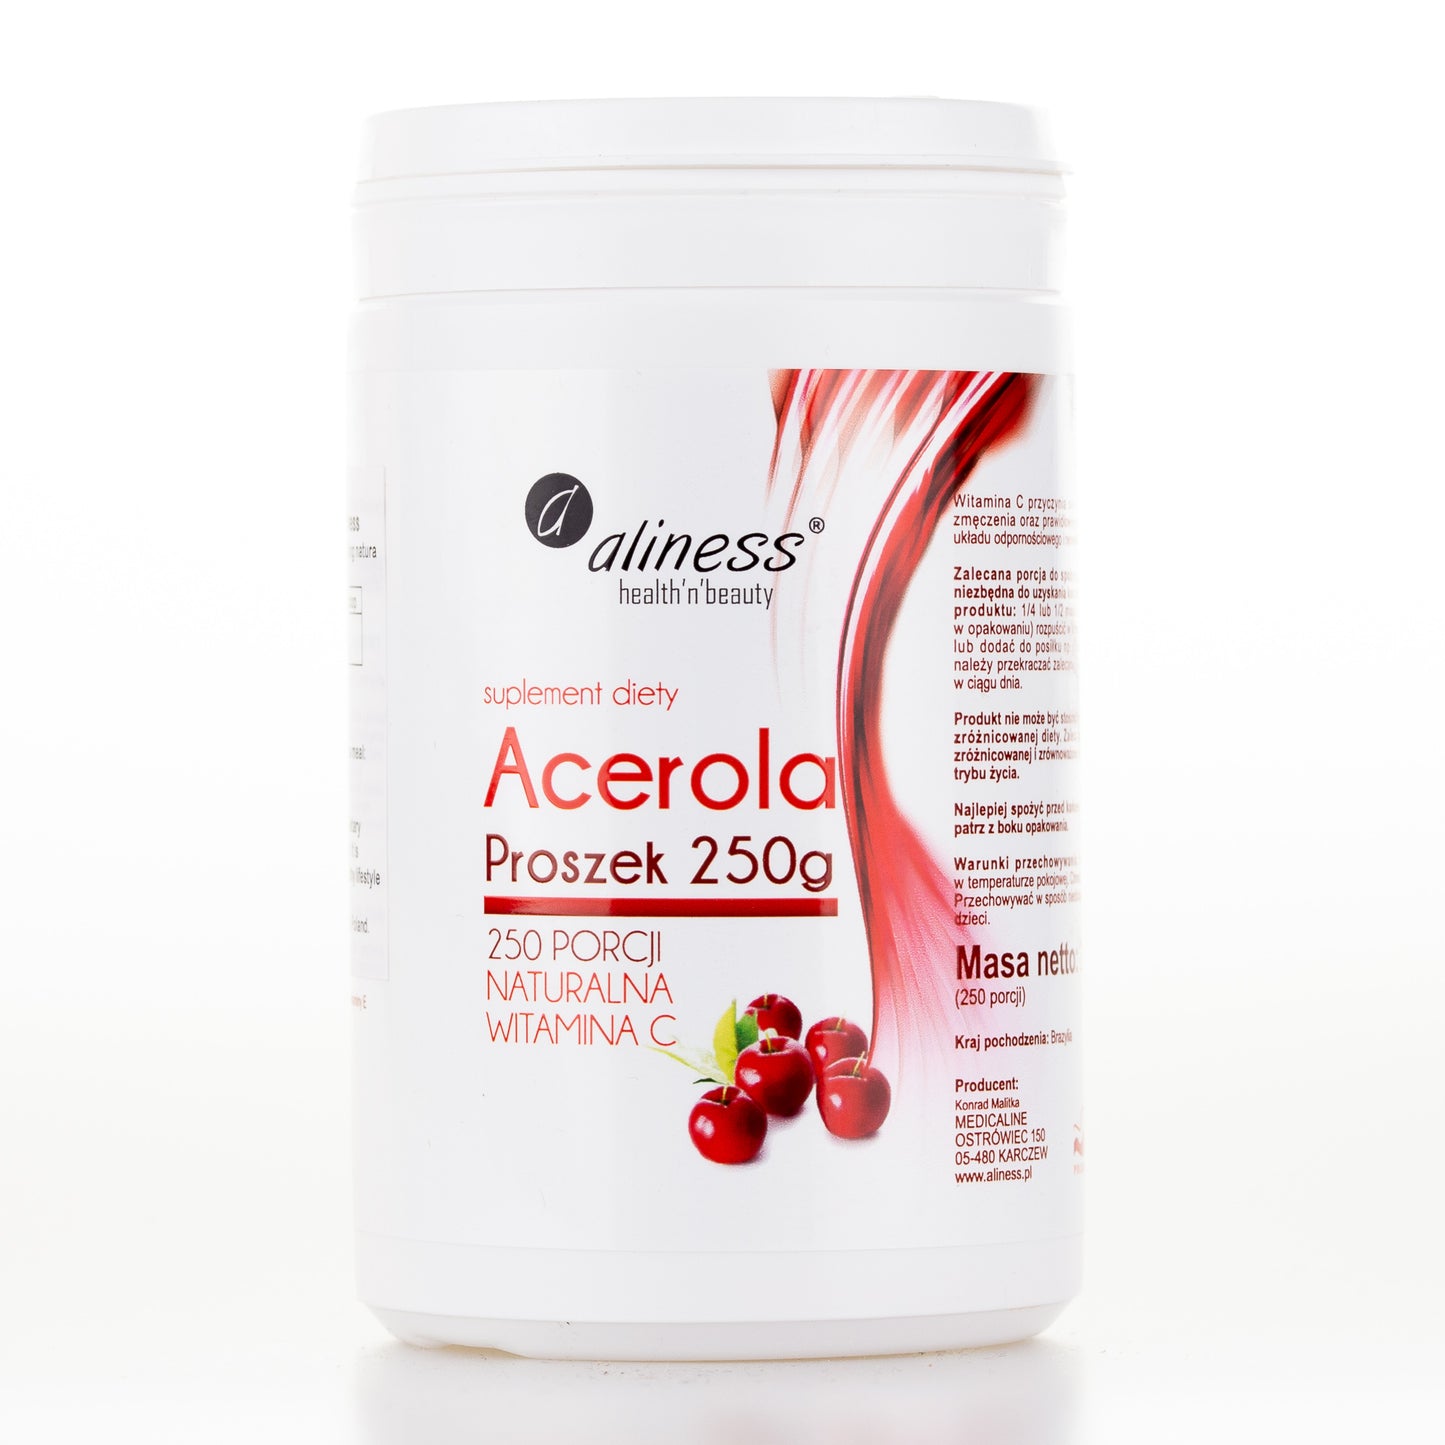 Acerola powder 250g, Natural Vitamin C